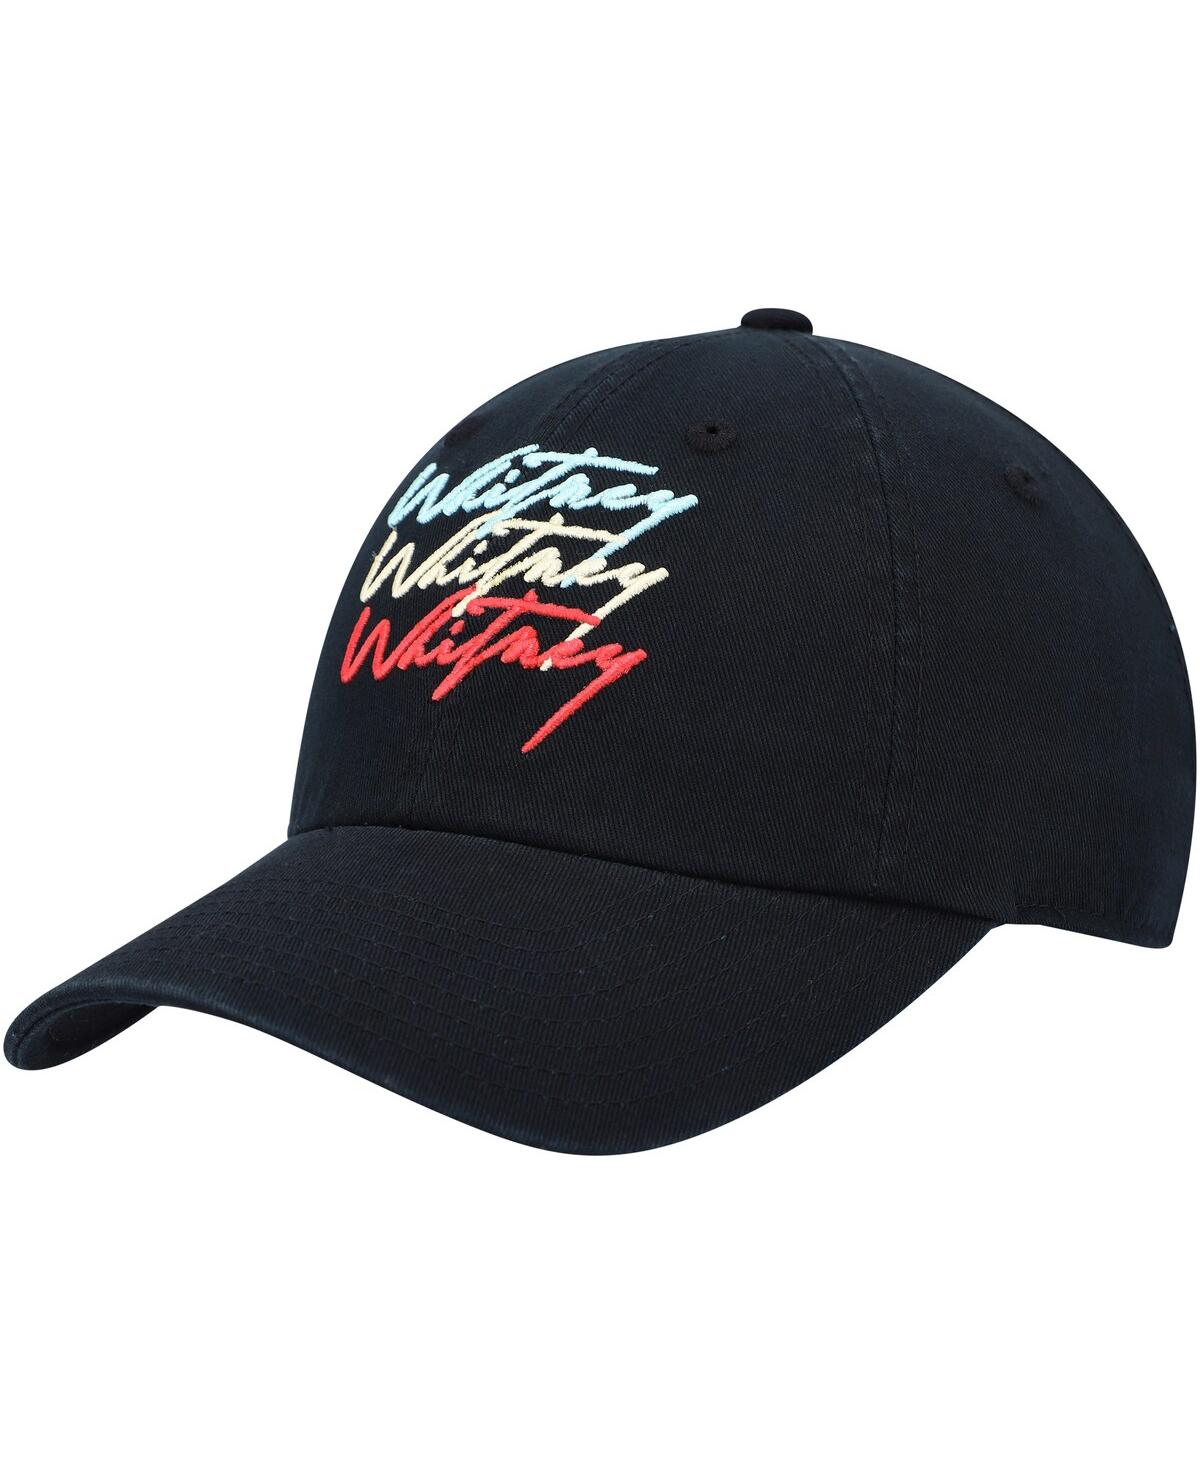 American Needle Men's  Black Whitney Houston Ballpark Adjustable Hat